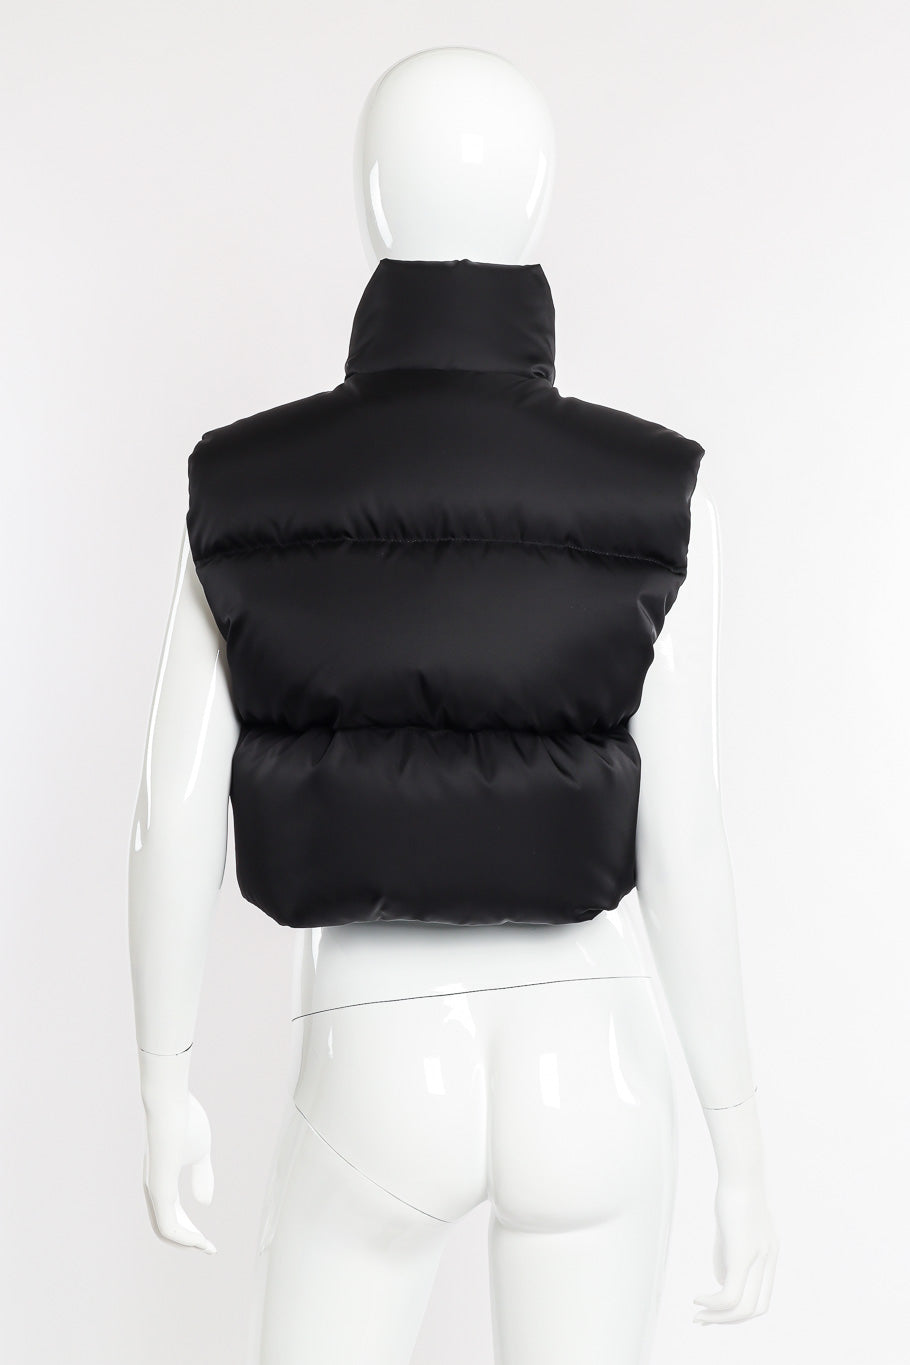 Prada Re-nylon Cropped Puffer Vest back view on mannequin @Recessla